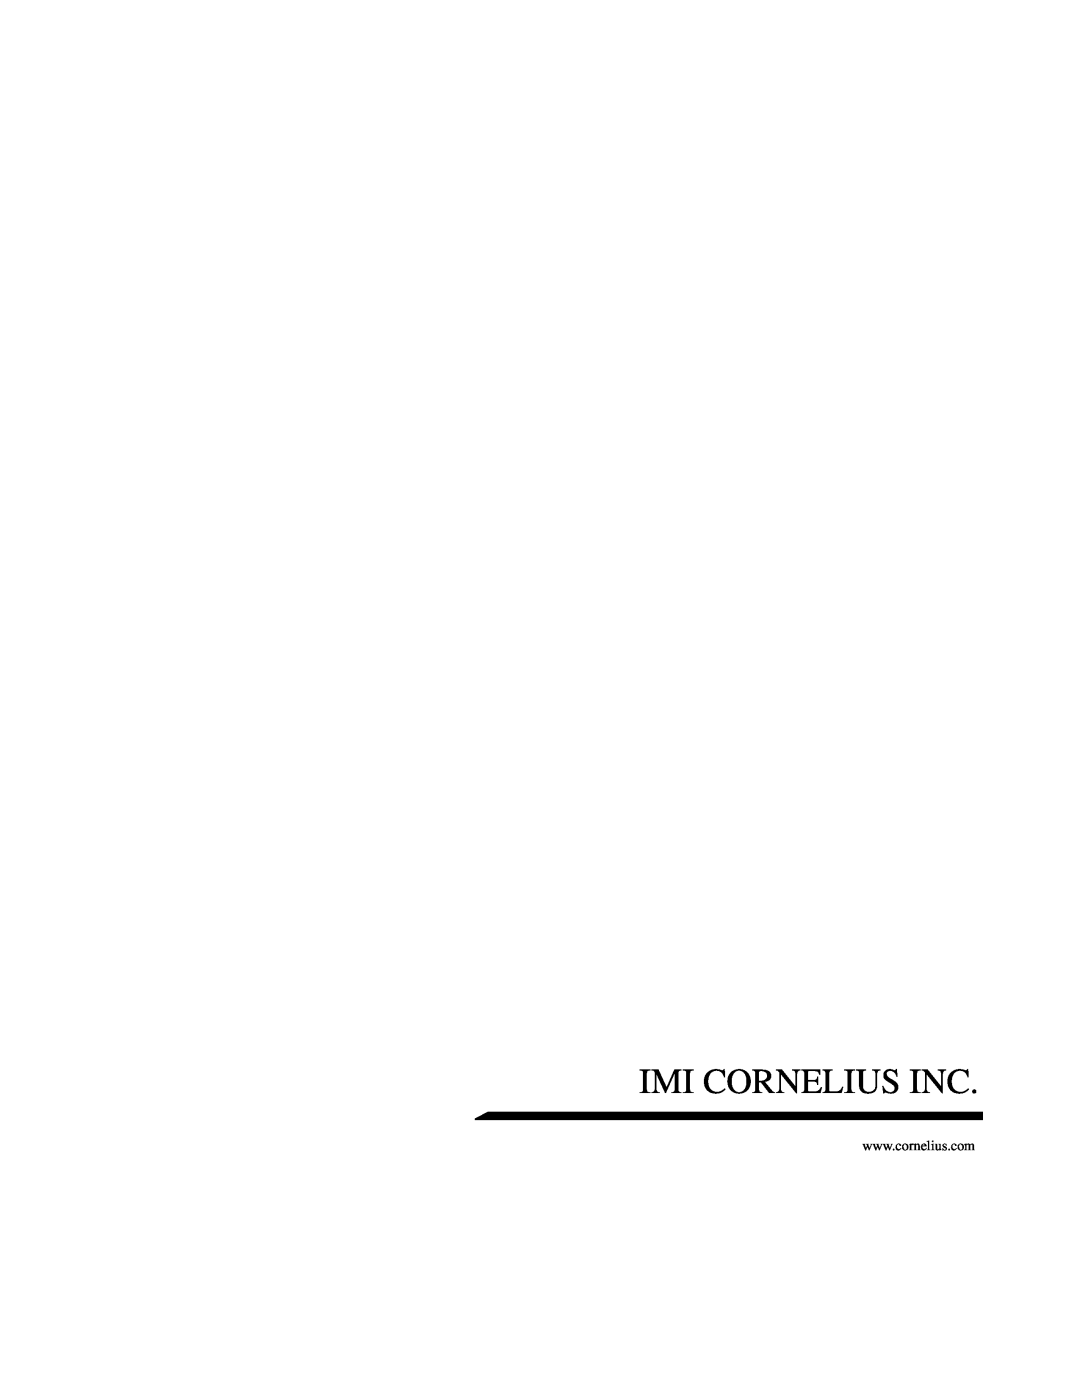 Maytag 224 manual Imi Cornelius Inc 